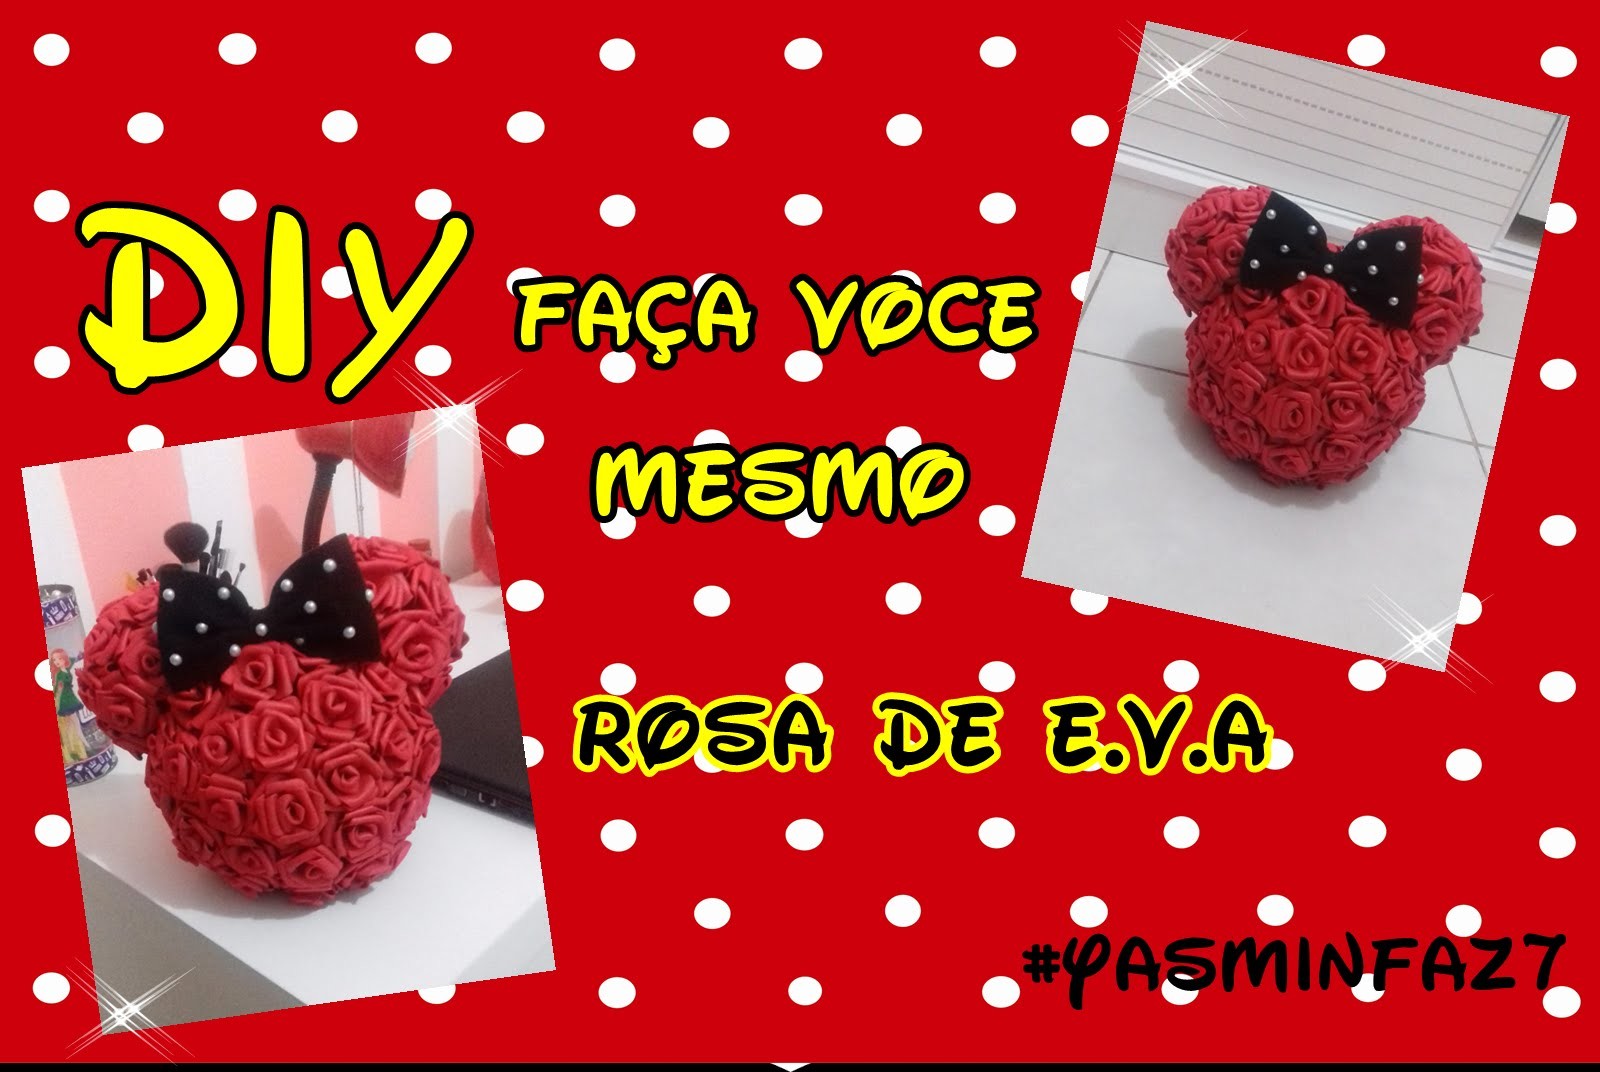 Festa Minnie - #YasminFaz7 - DIY Rosa de Eva para Topiaria Minnie